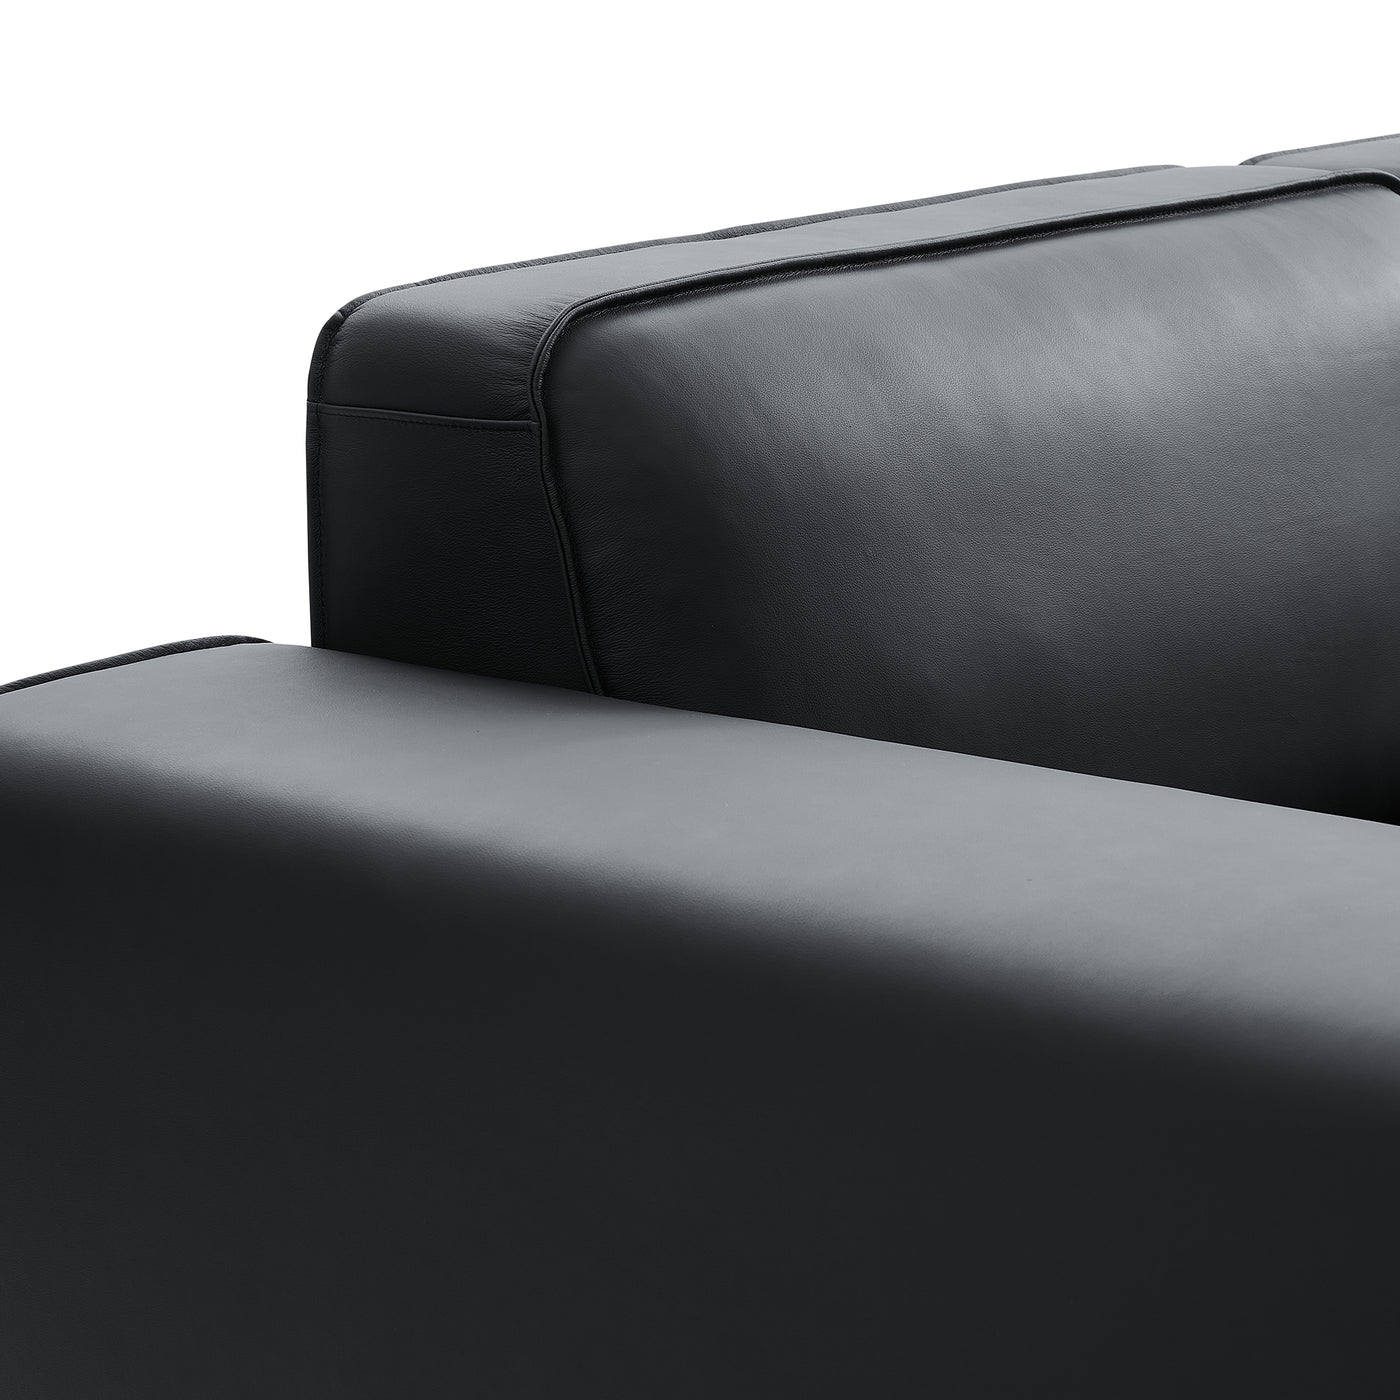 Domus Modular Dark Gray Leather U Shaped Sectional Sofa-Black